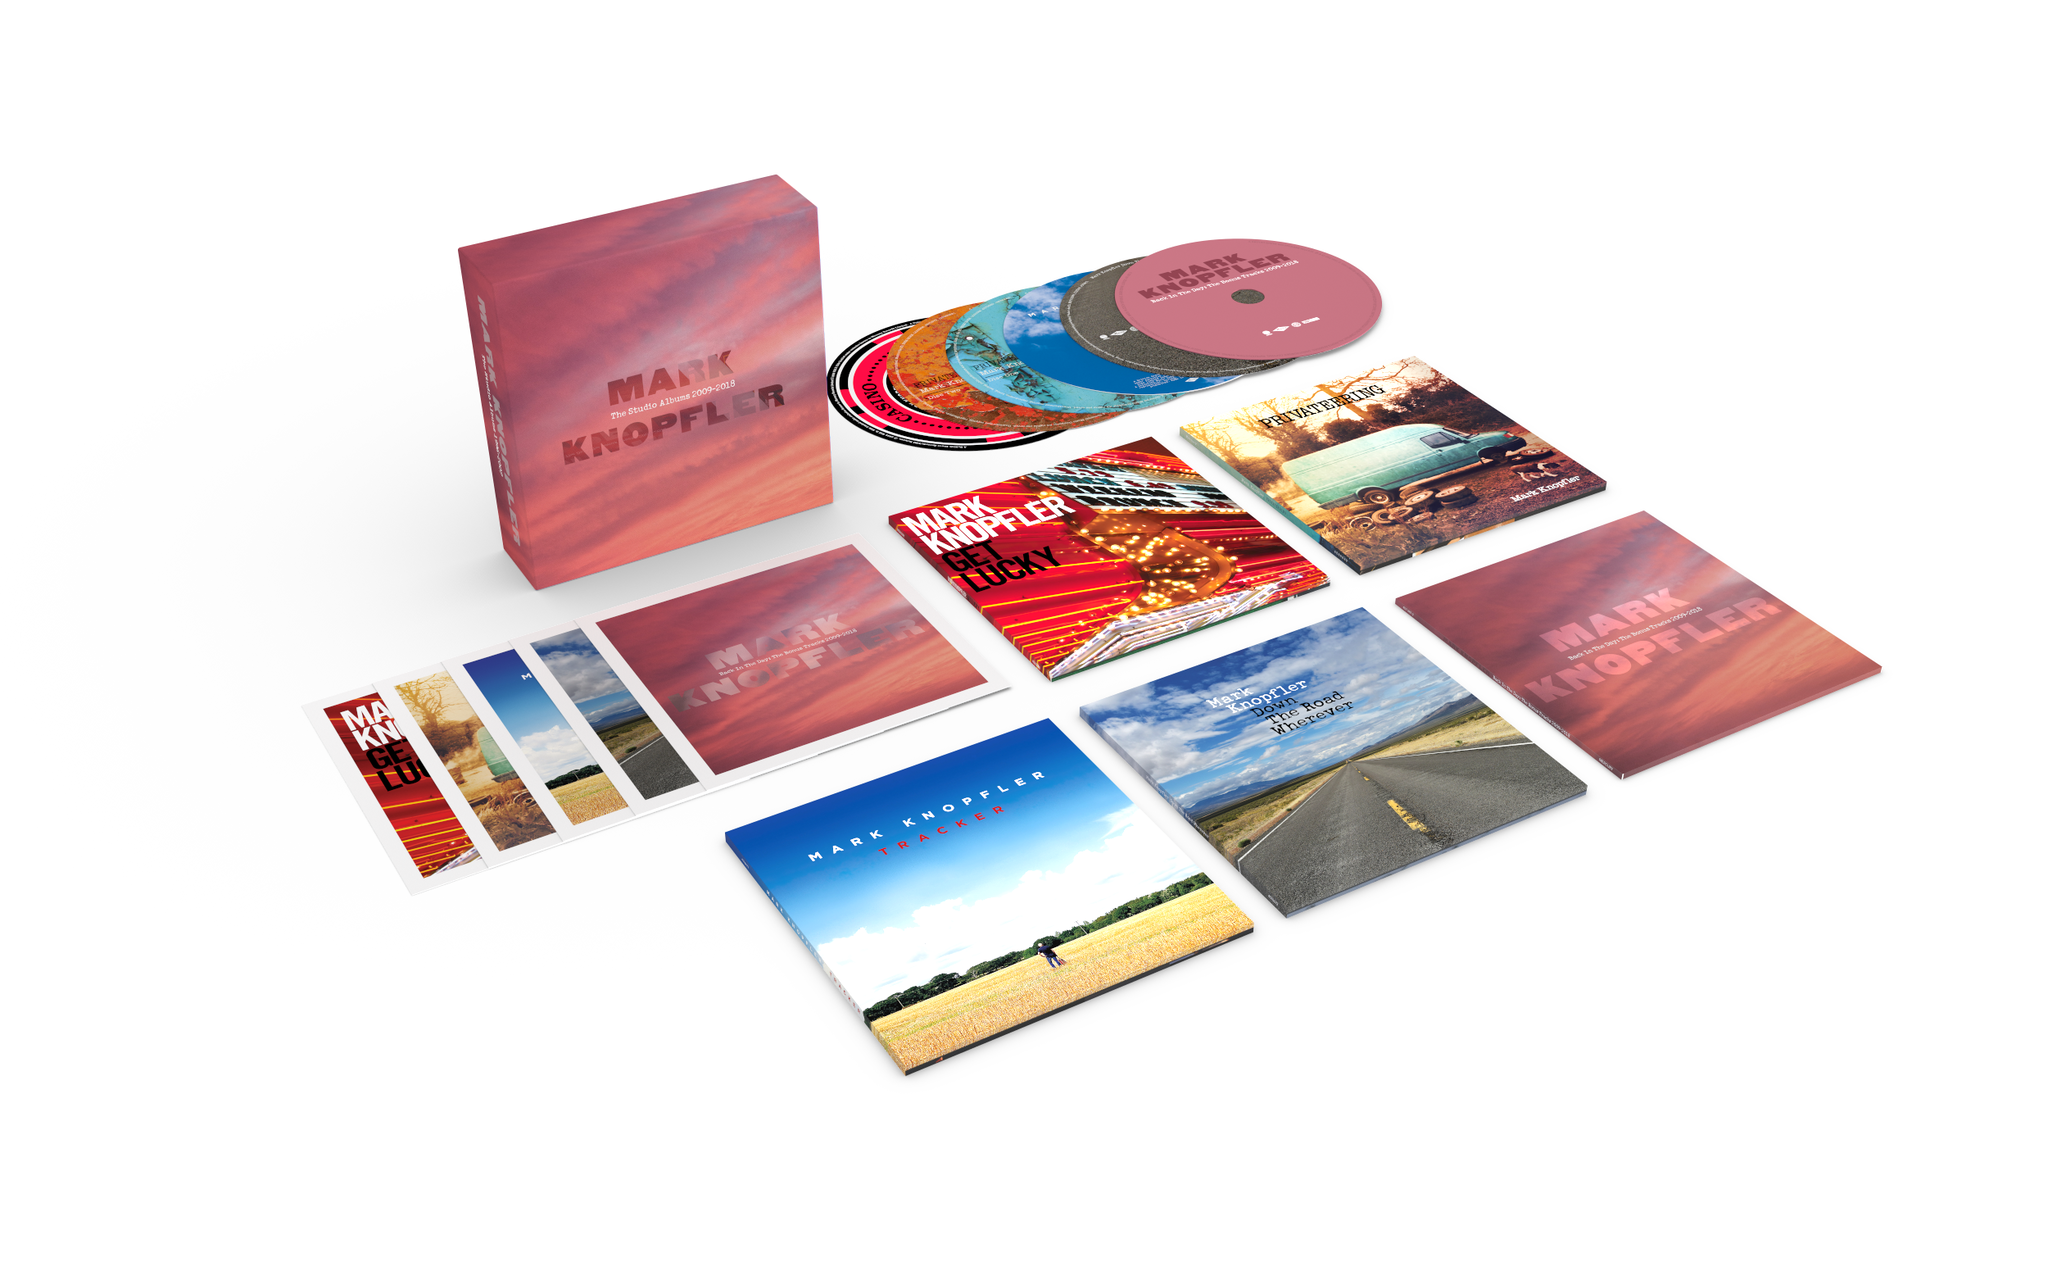 Mark Knopfler - The Studio Albums 2009 – 2018: Deluxe 6CD Box Set